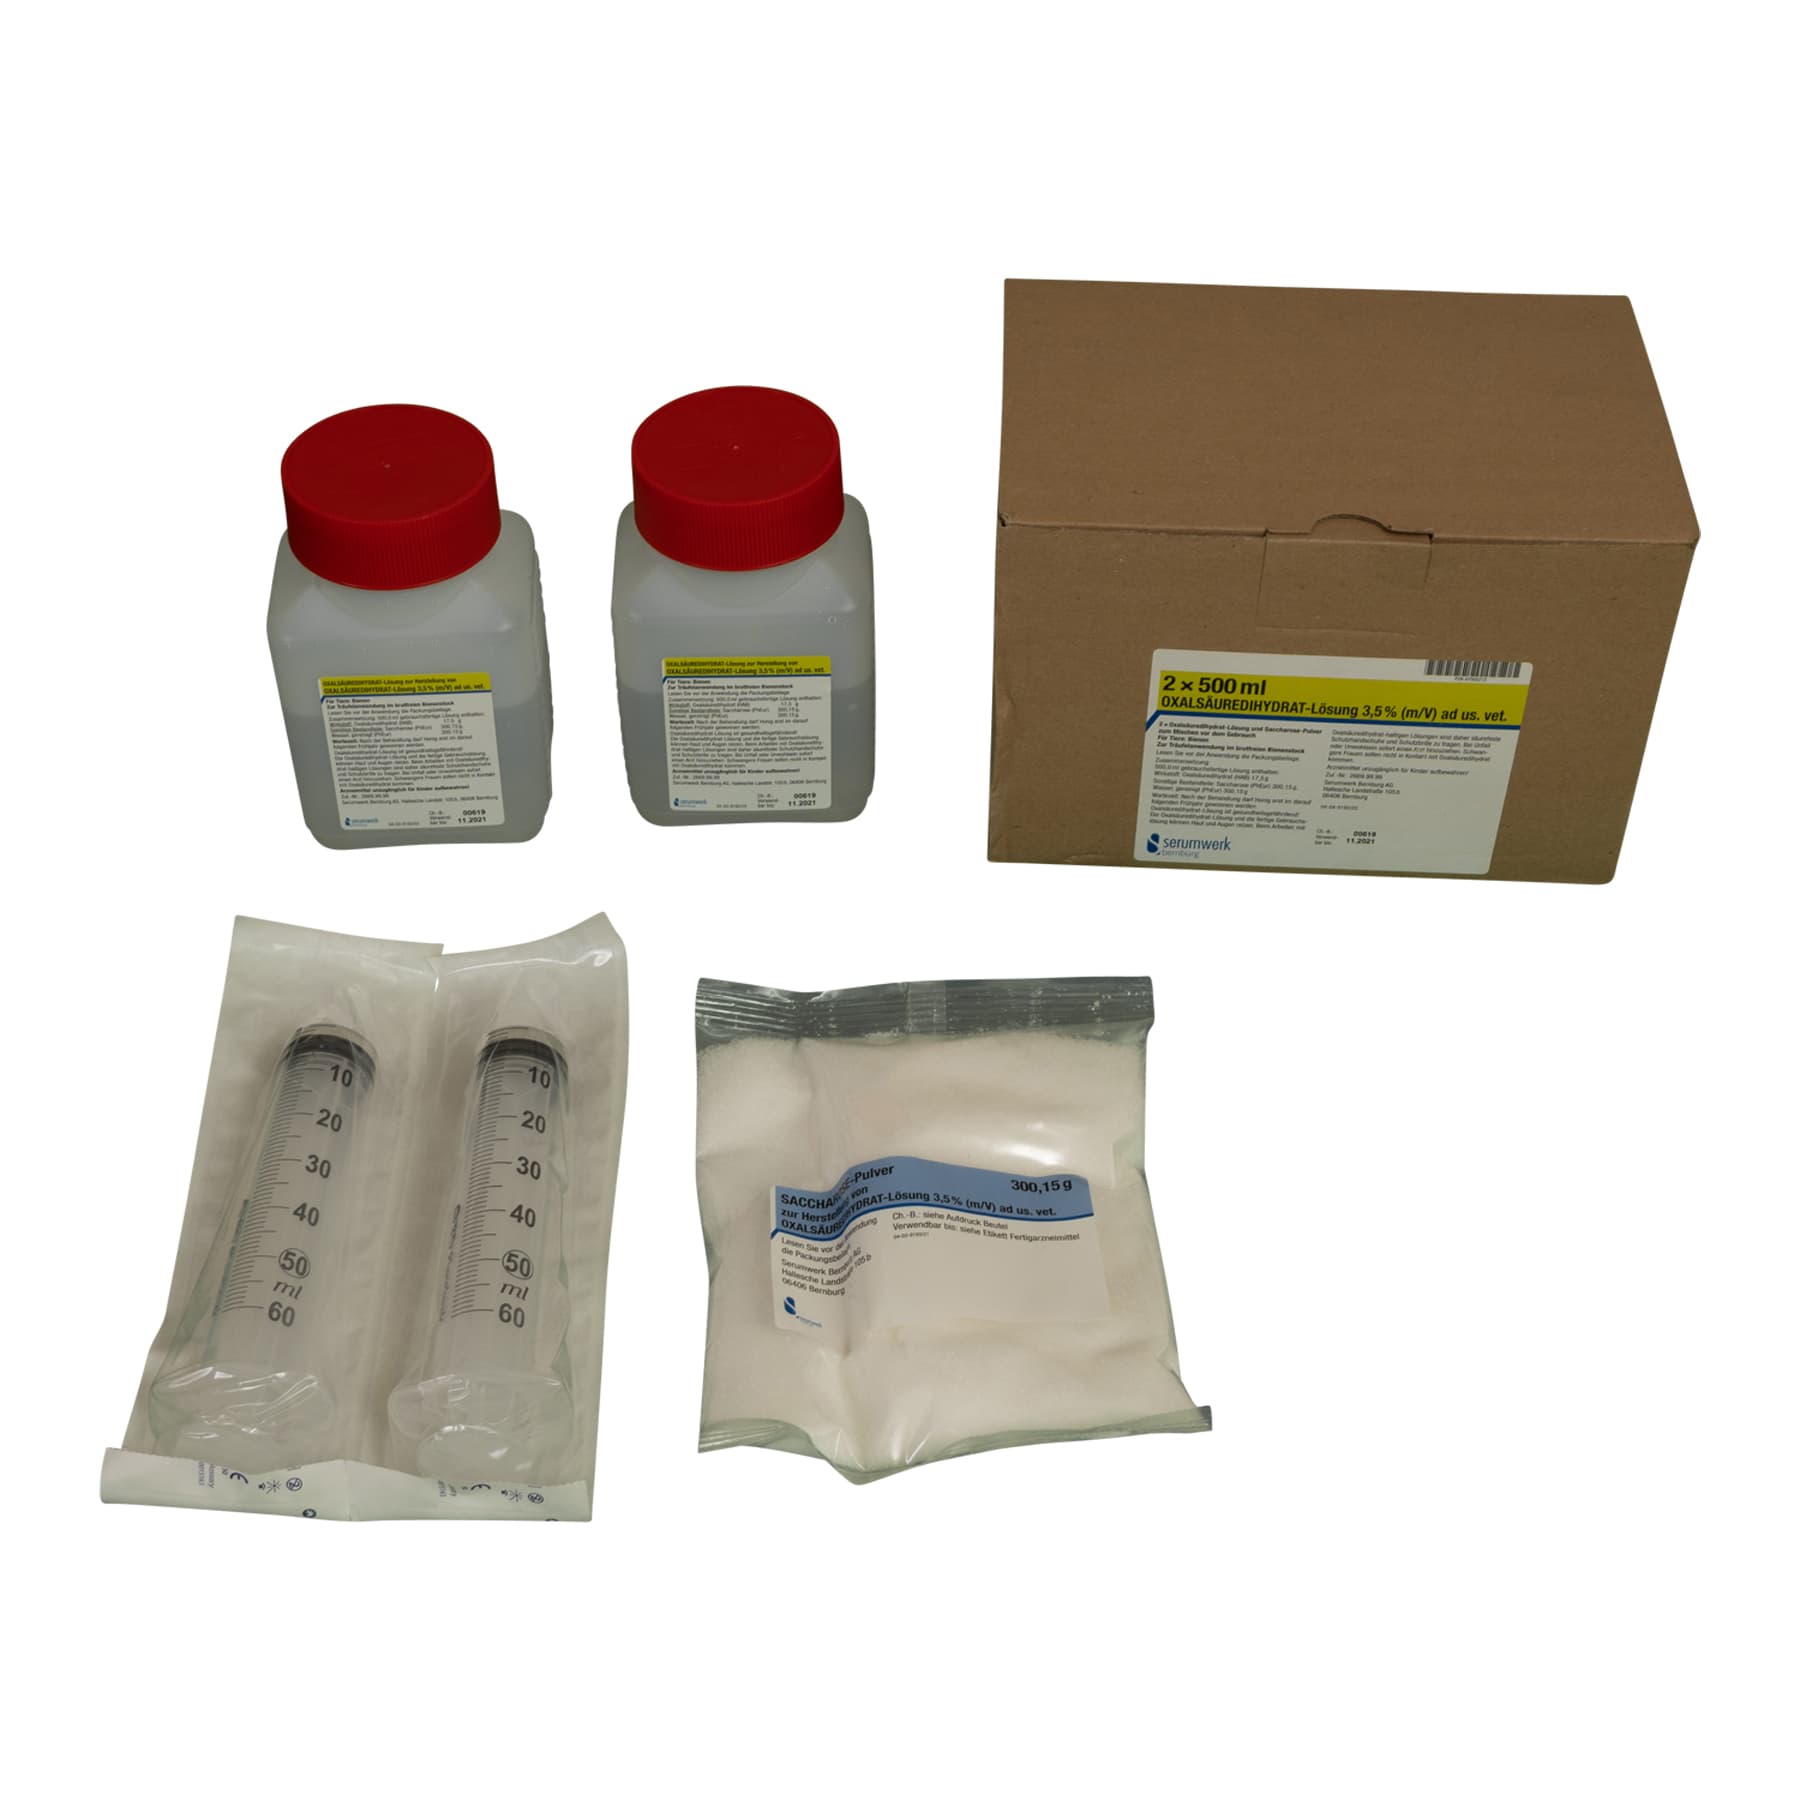 Oxalsäuredihydrat-Lösung 3,5% (m/V) ad us. vet, 2 x 500 ml, aktuell haltbar bis ca. 09/22